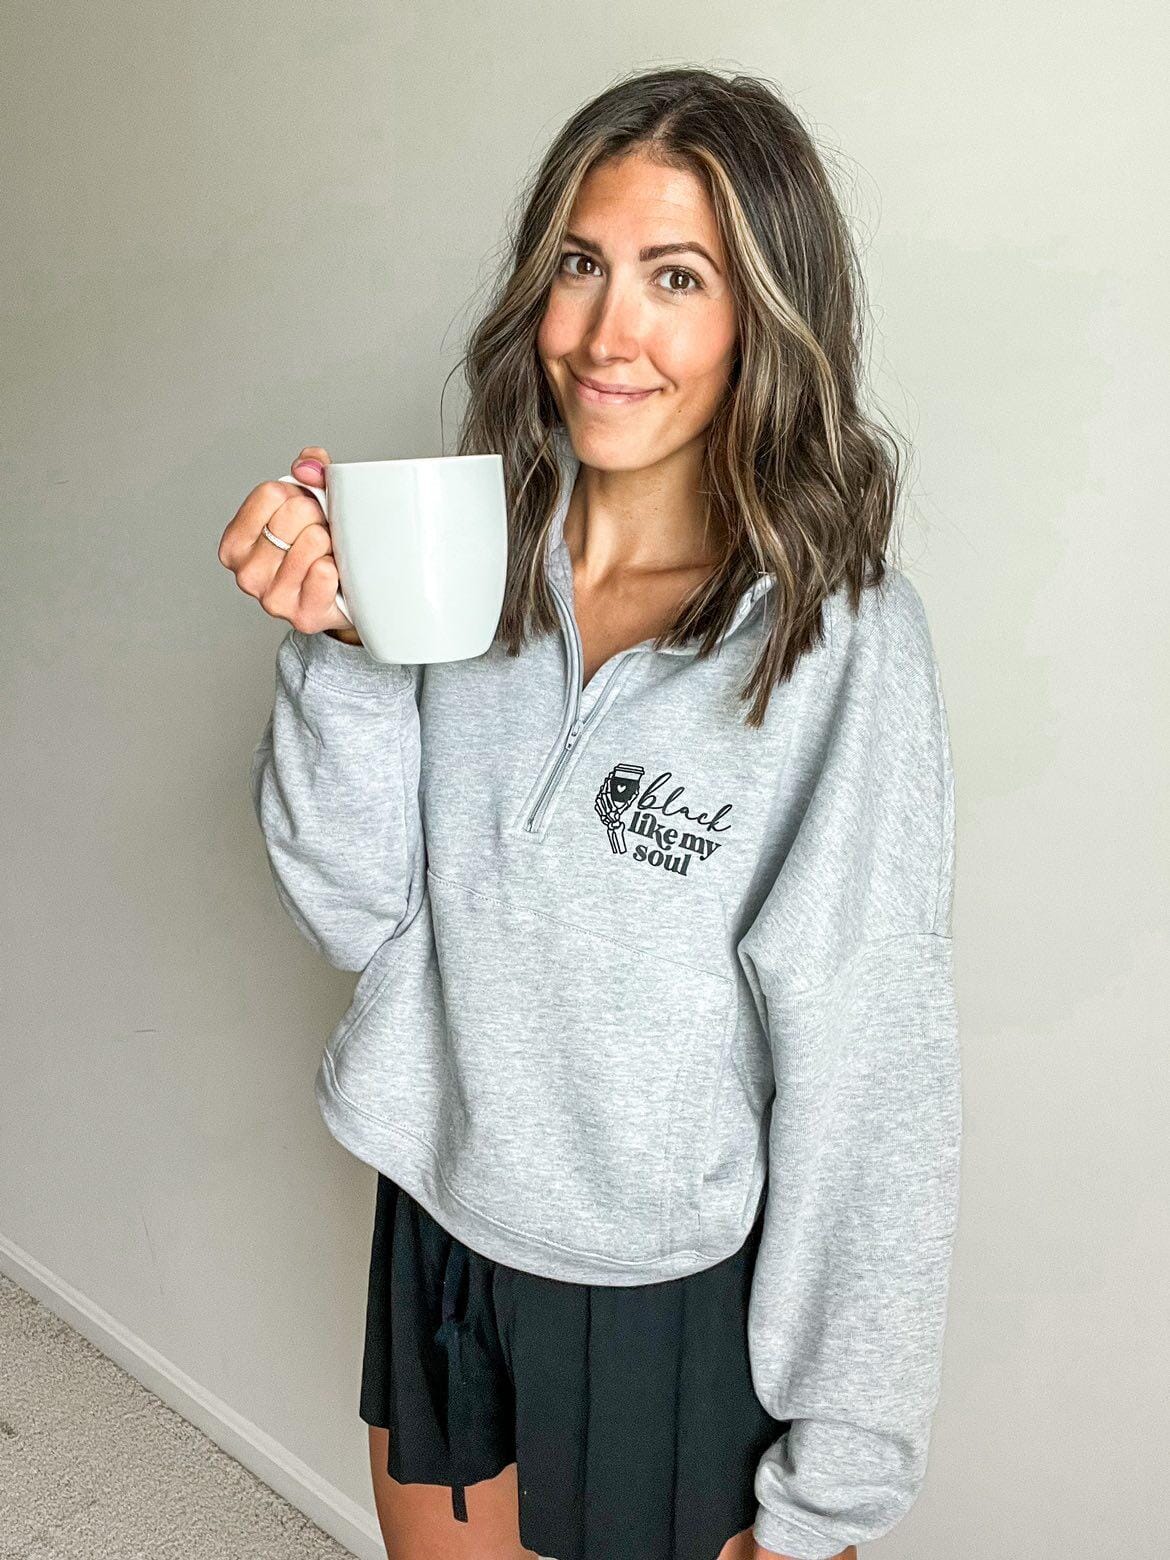 Woman in a gray coffee-themed sweatshirt